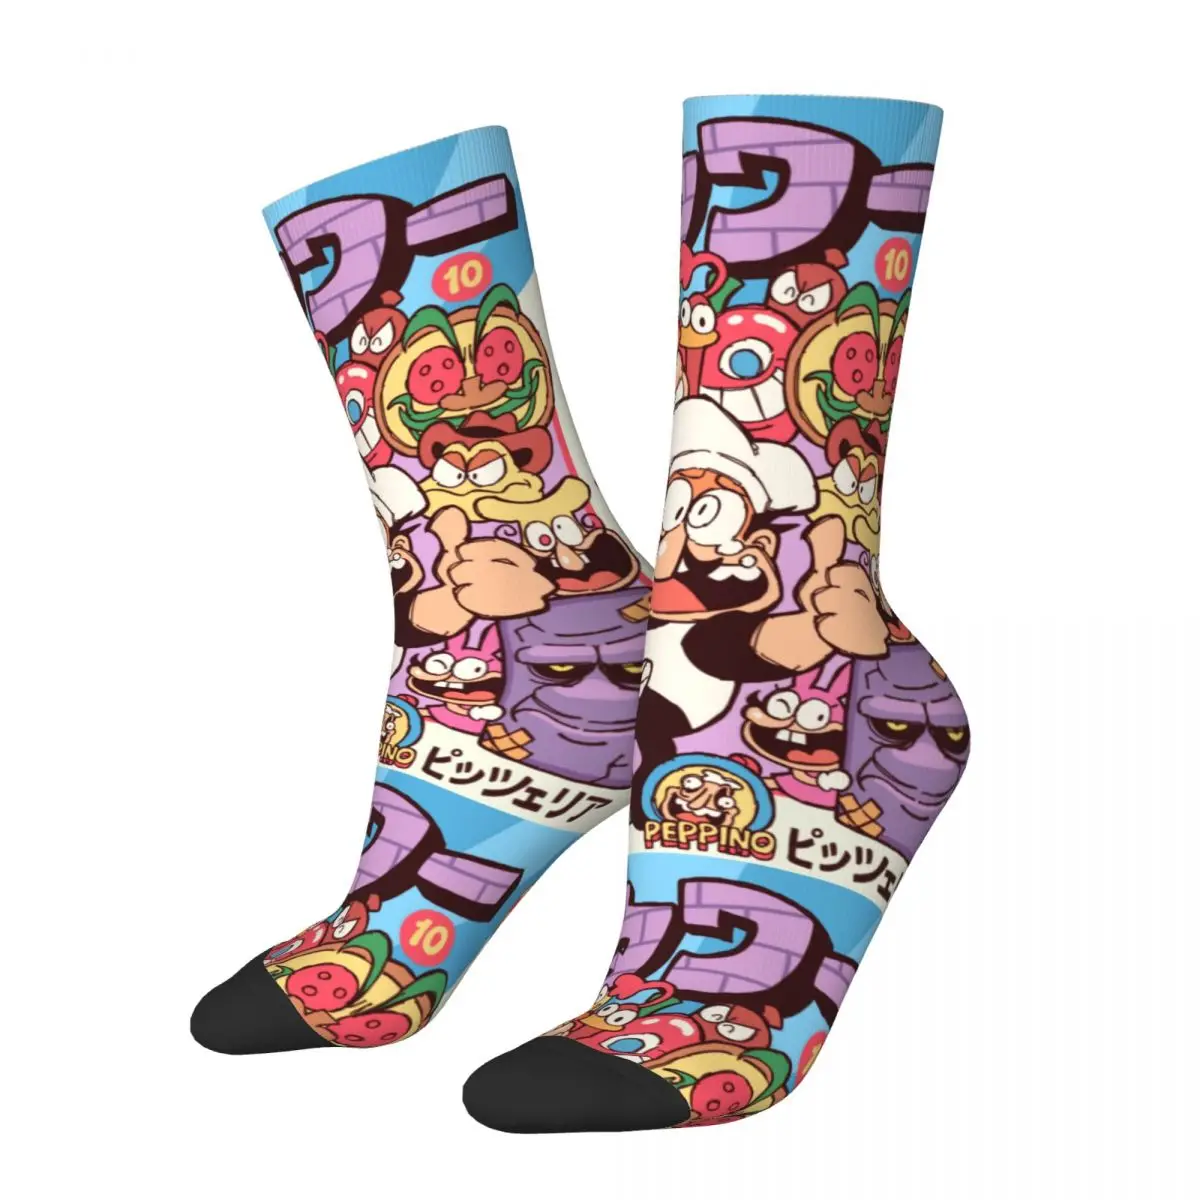 

Pizza Tower Manga Theme Design Crew Socks Accessories for Unisex Cozy Dress Socks